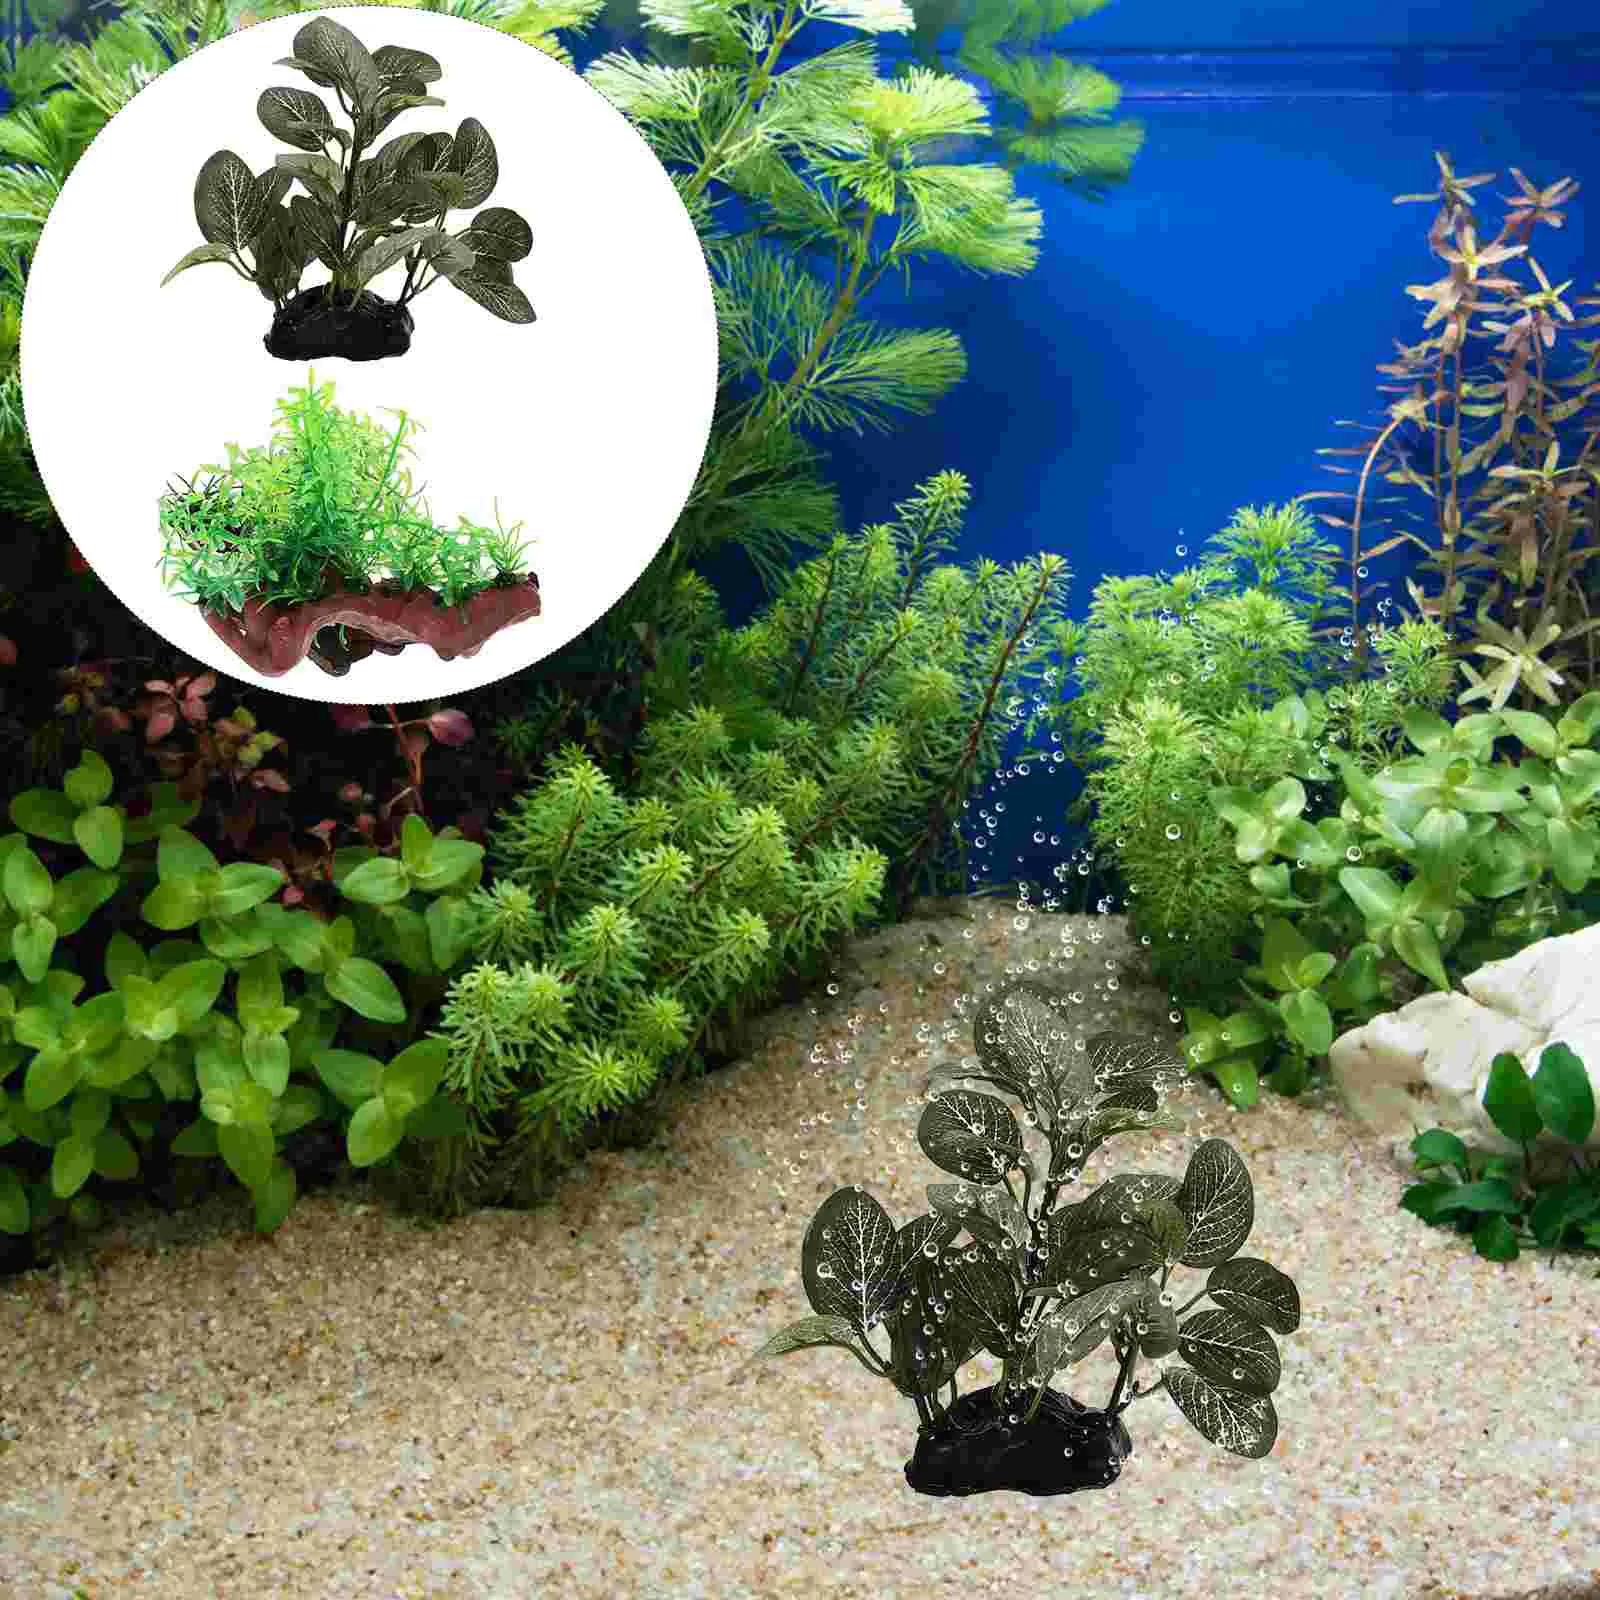 

Tank Aquarium Aquatic Artificial Decor Water Underwater Ornaments Landscape Decoration Seaweed Figurines Fake Lfelike Terrarium